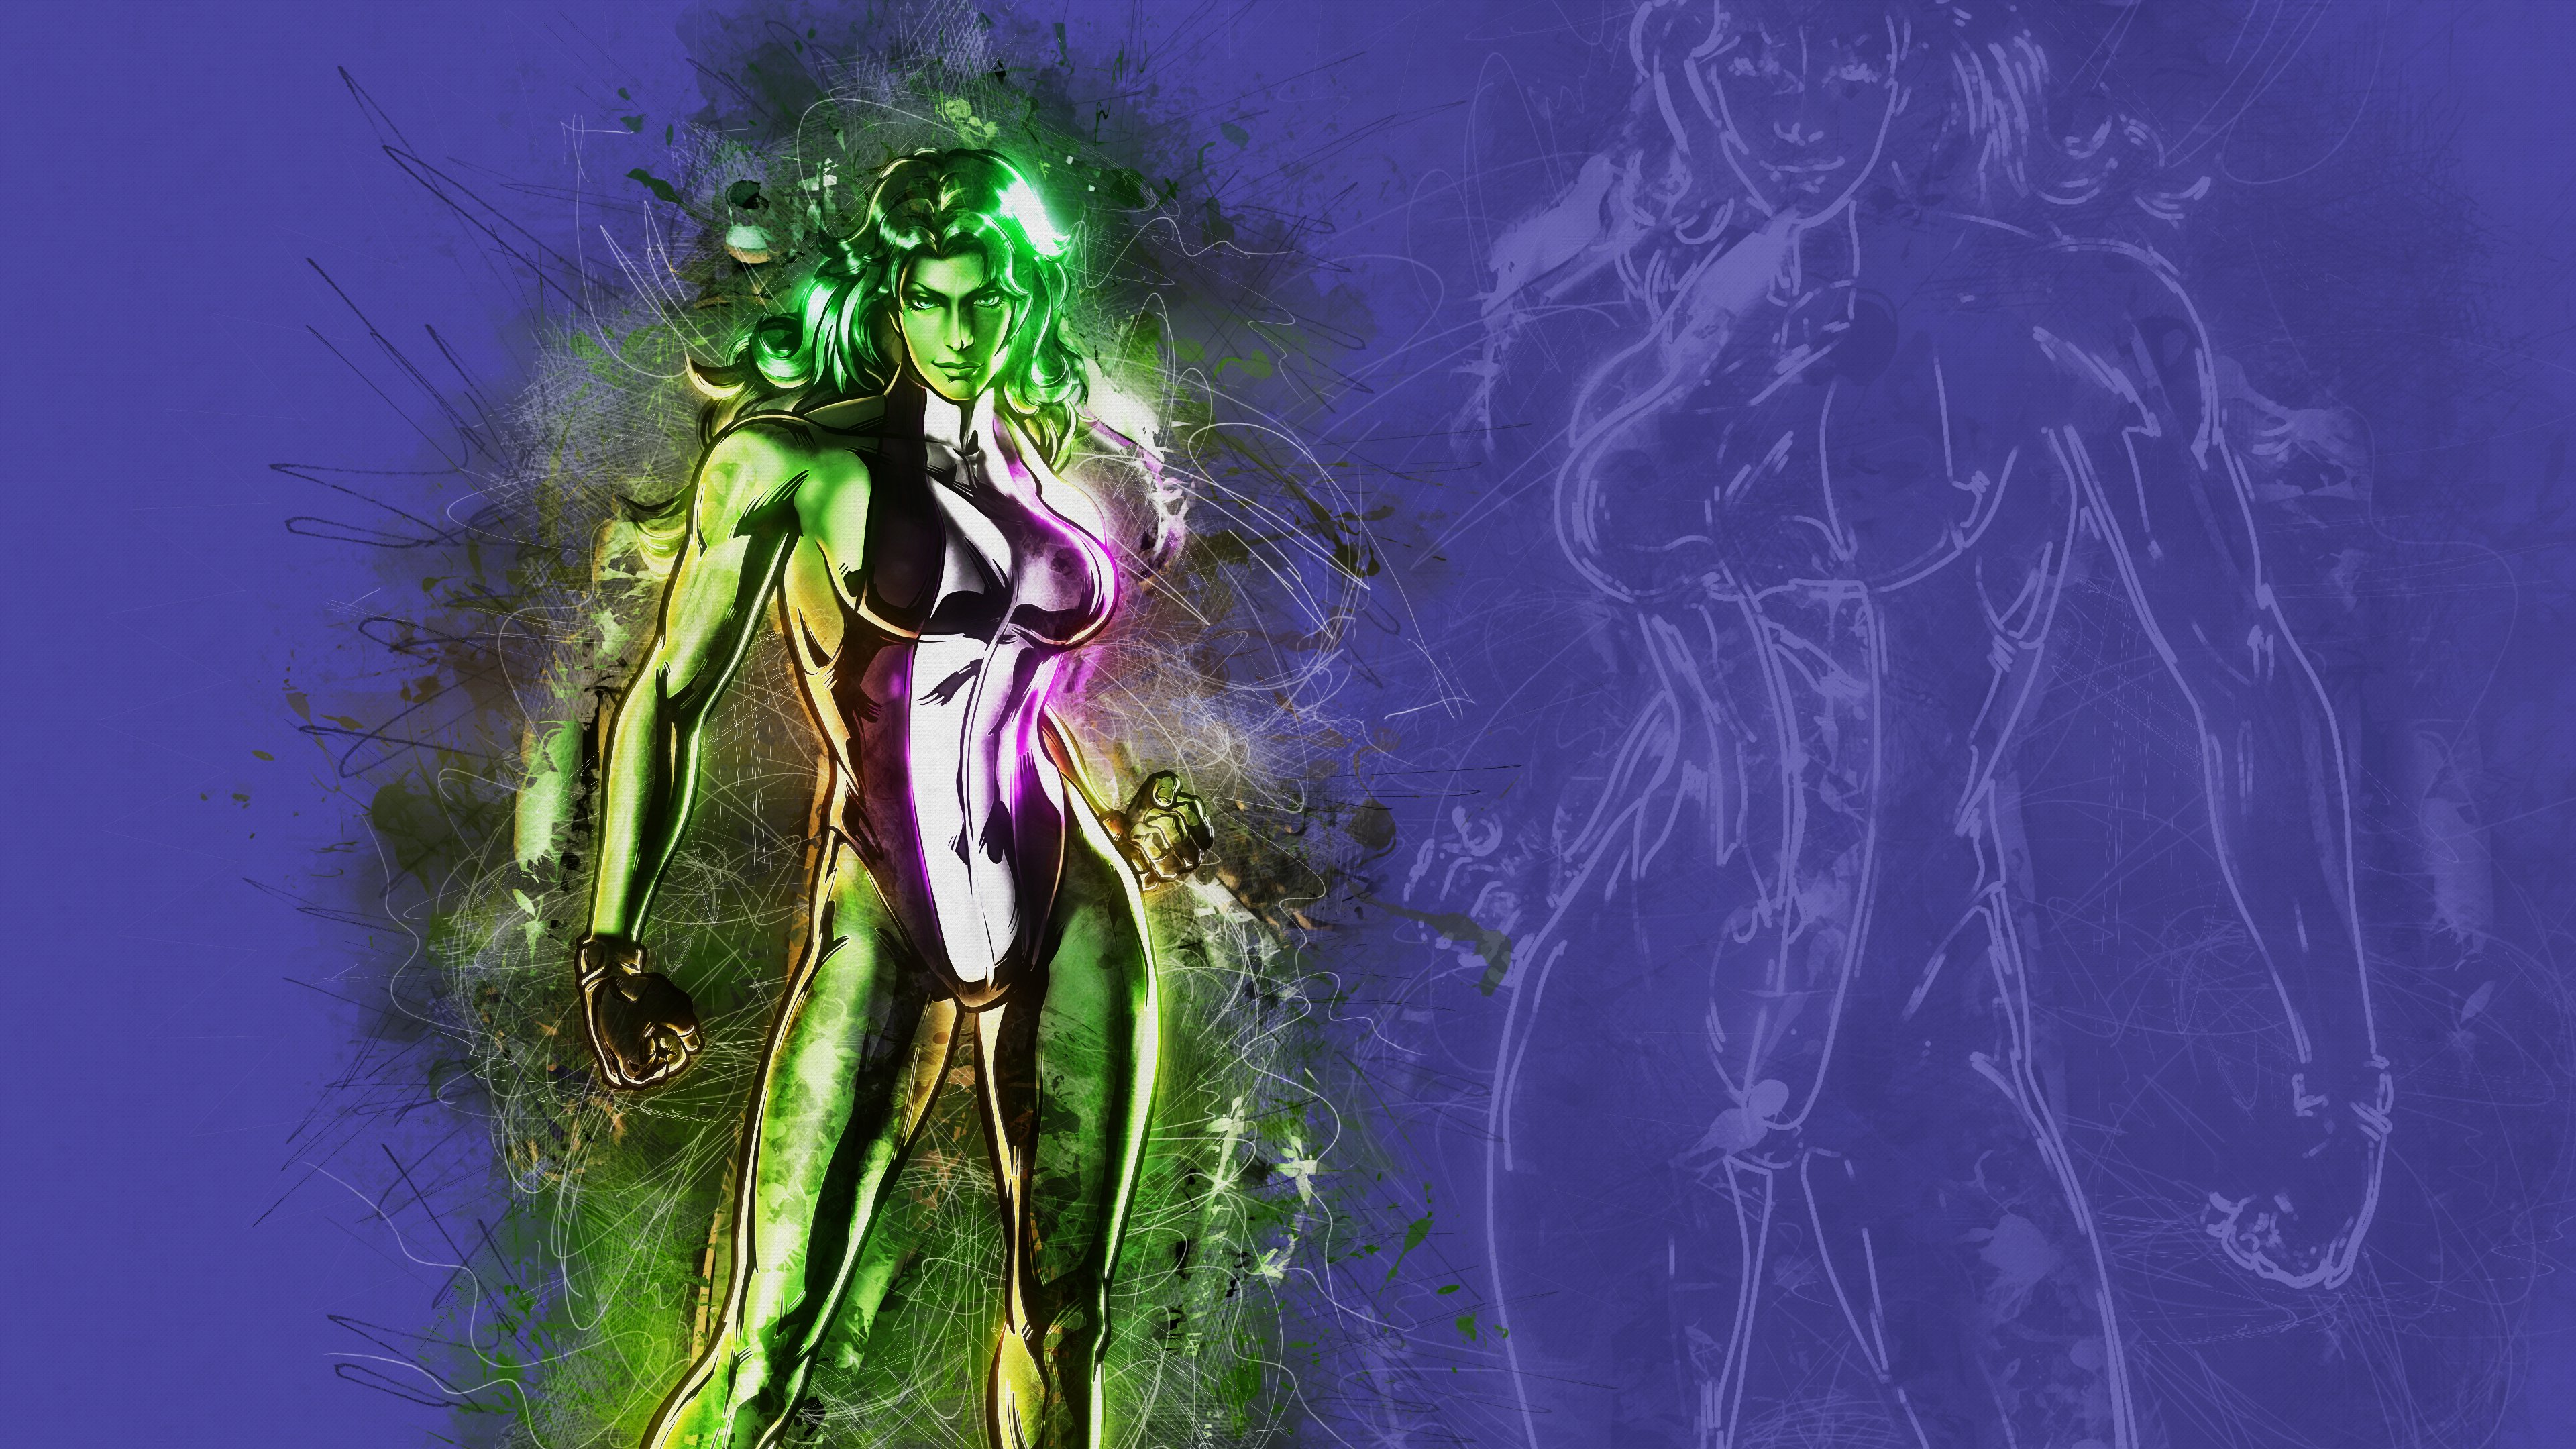 Hero Comics Artwork She Hulk Hulk Marvel Vs Capcom Marvel Vs Capcom 3 Fate Of Two Worlds 3840x2160